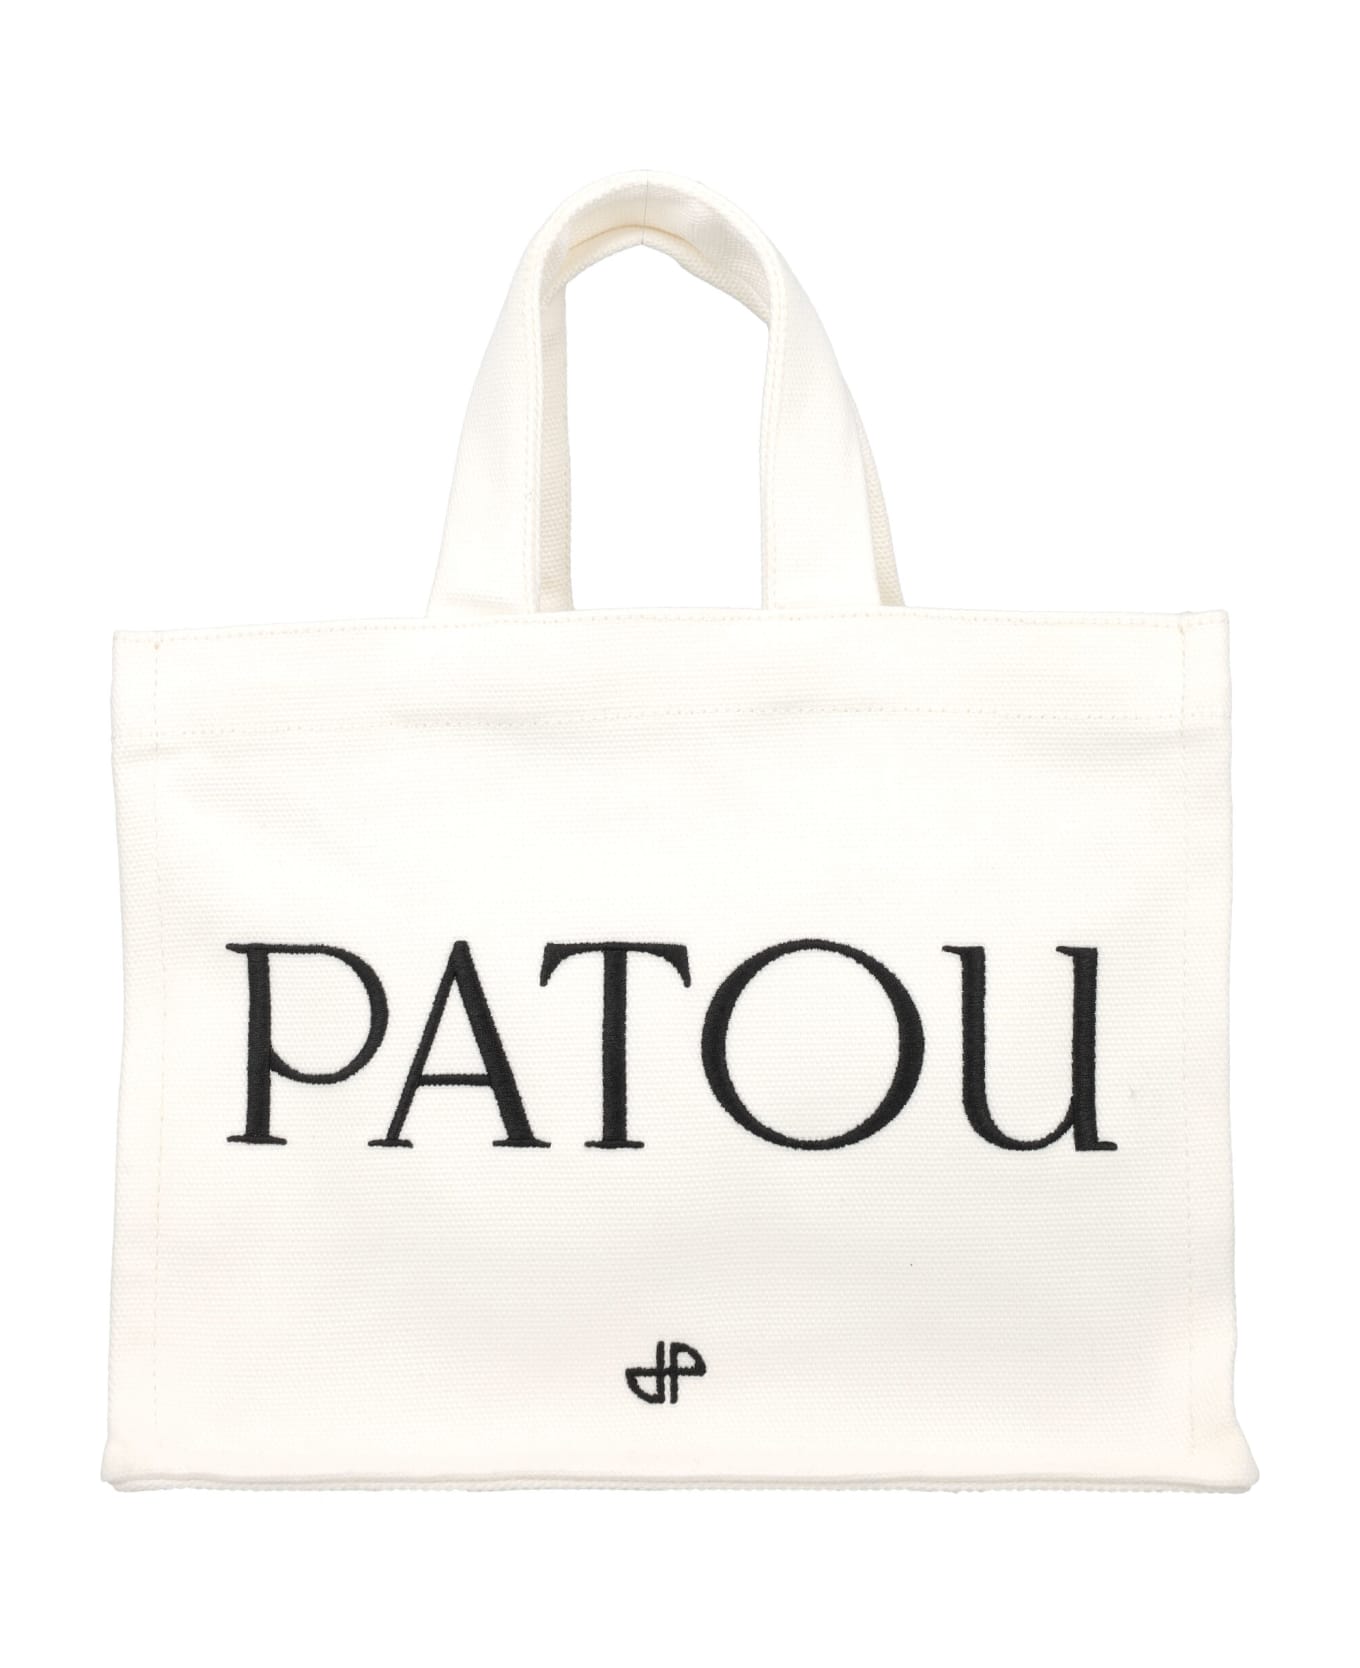 Patou Small Canvas Tote Bag - White トートバッグ